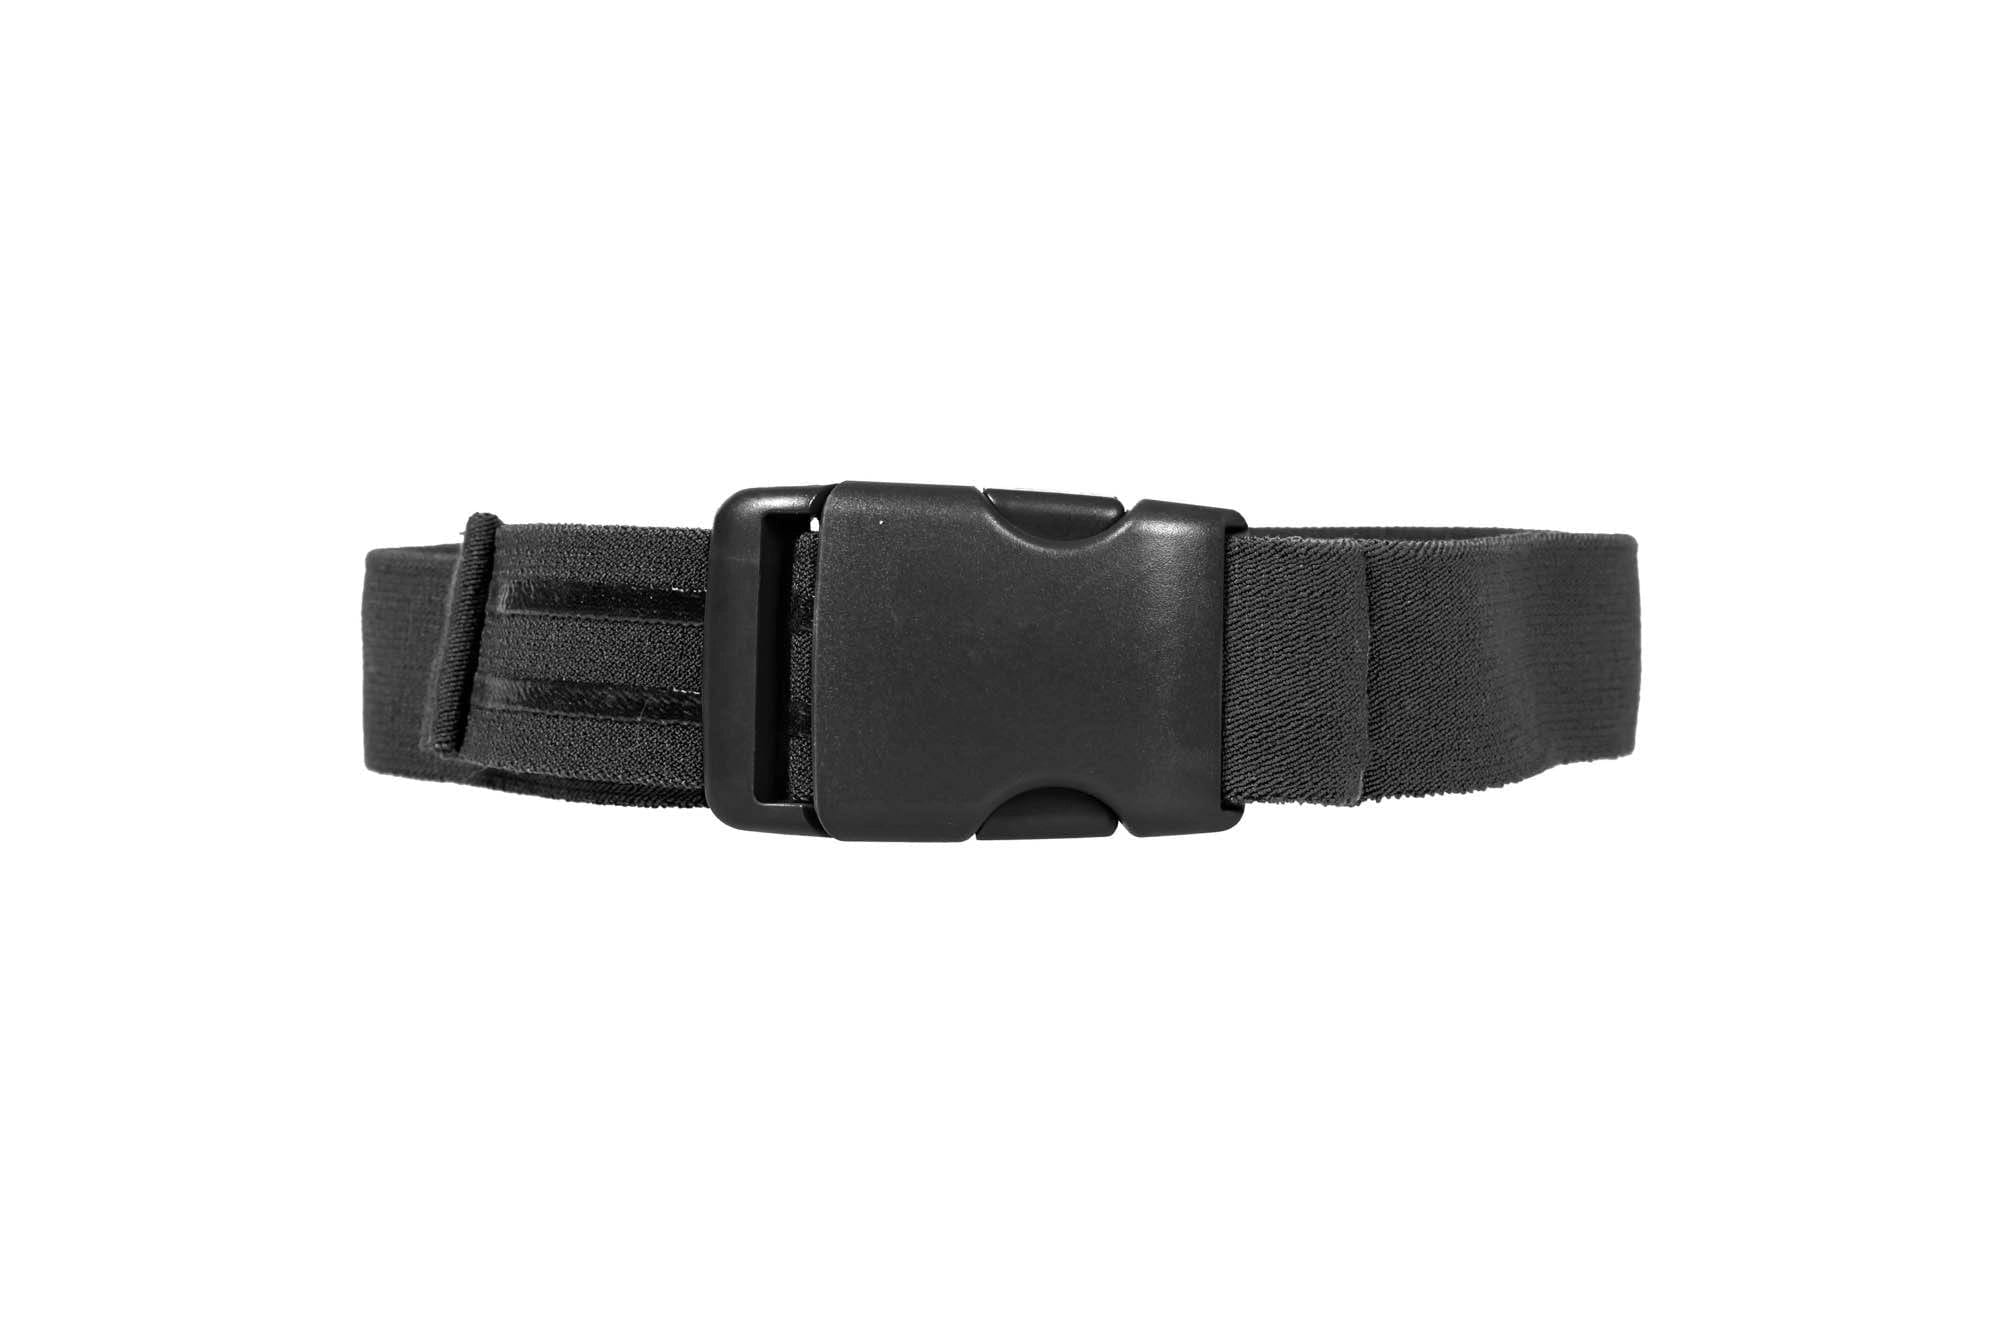 Anti-slip belt for drop leg holsters - black